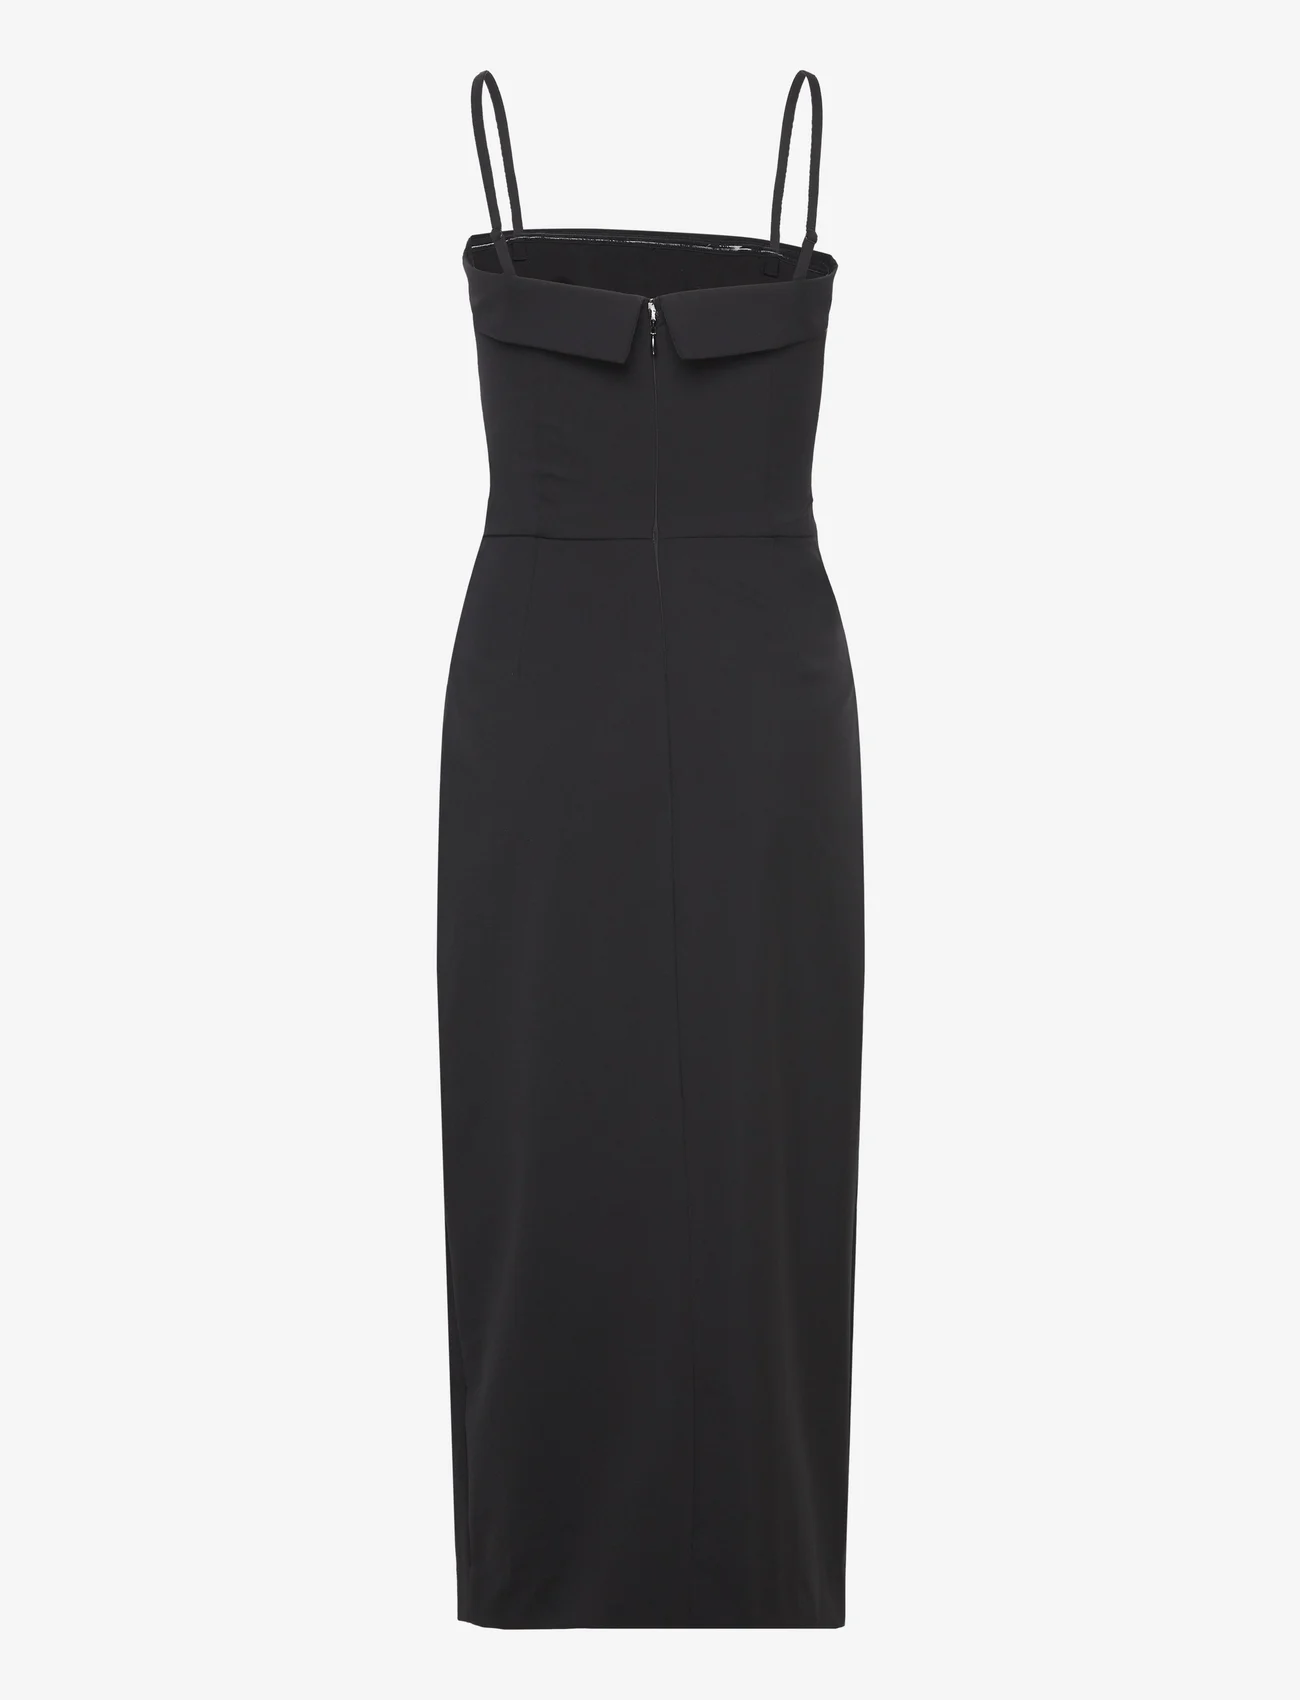 HOLZWEILER - Shelly Dress - feestelijke kleding voor outlet-prijzen - black - 1